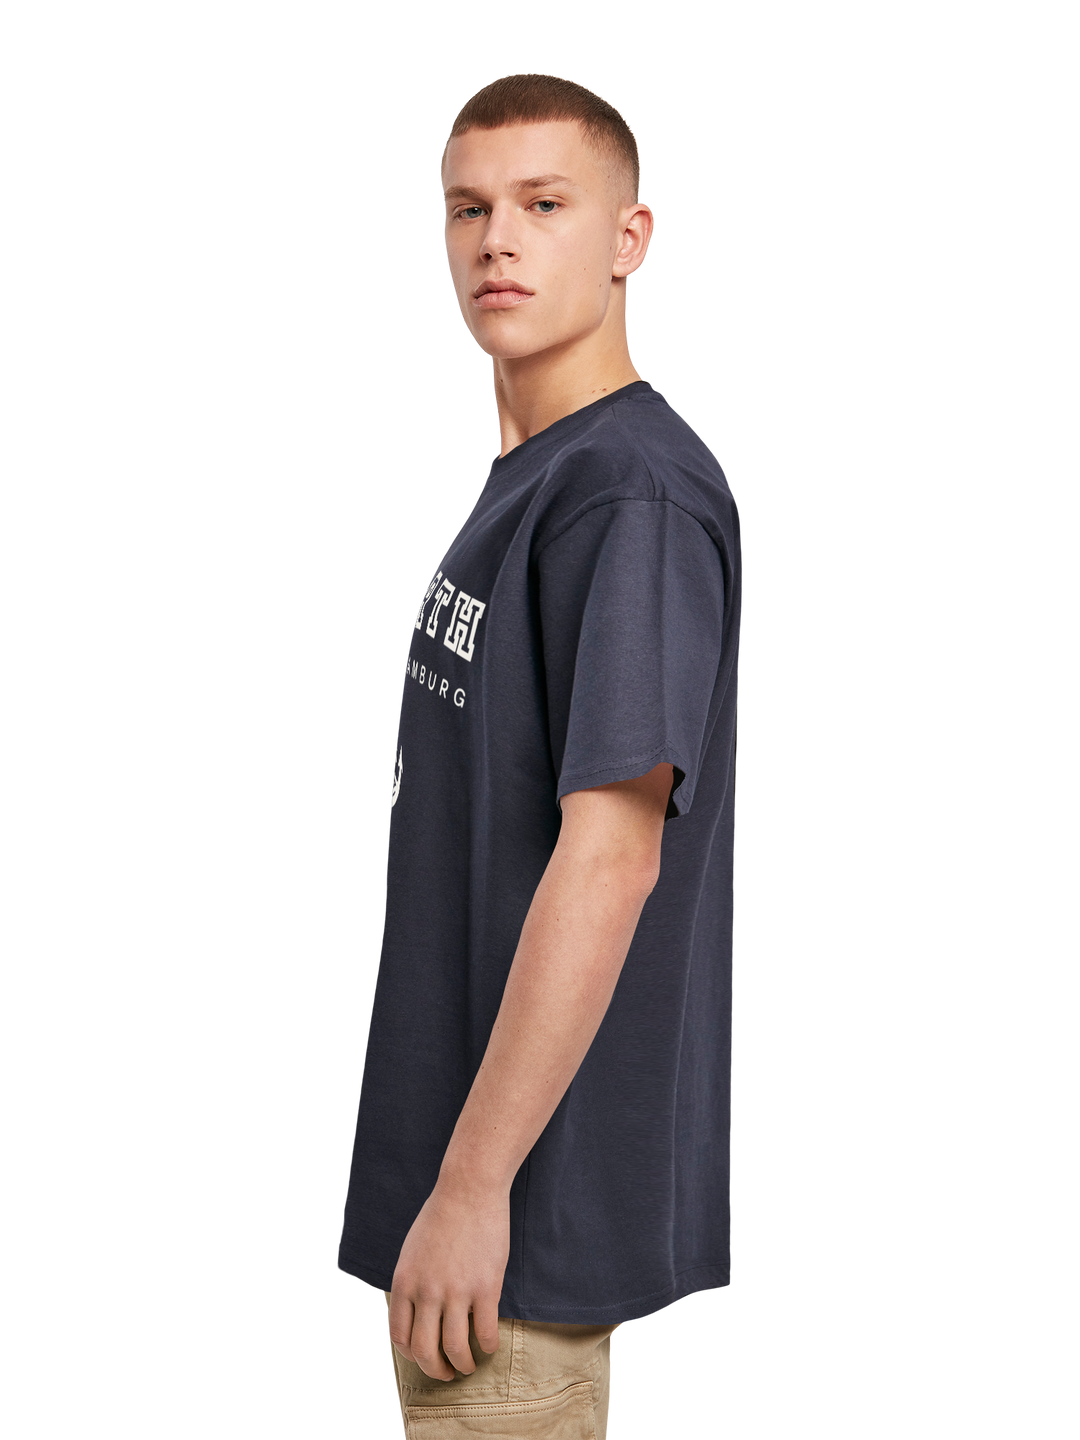 KNUT | Oversize T-Shirt Herren Go North